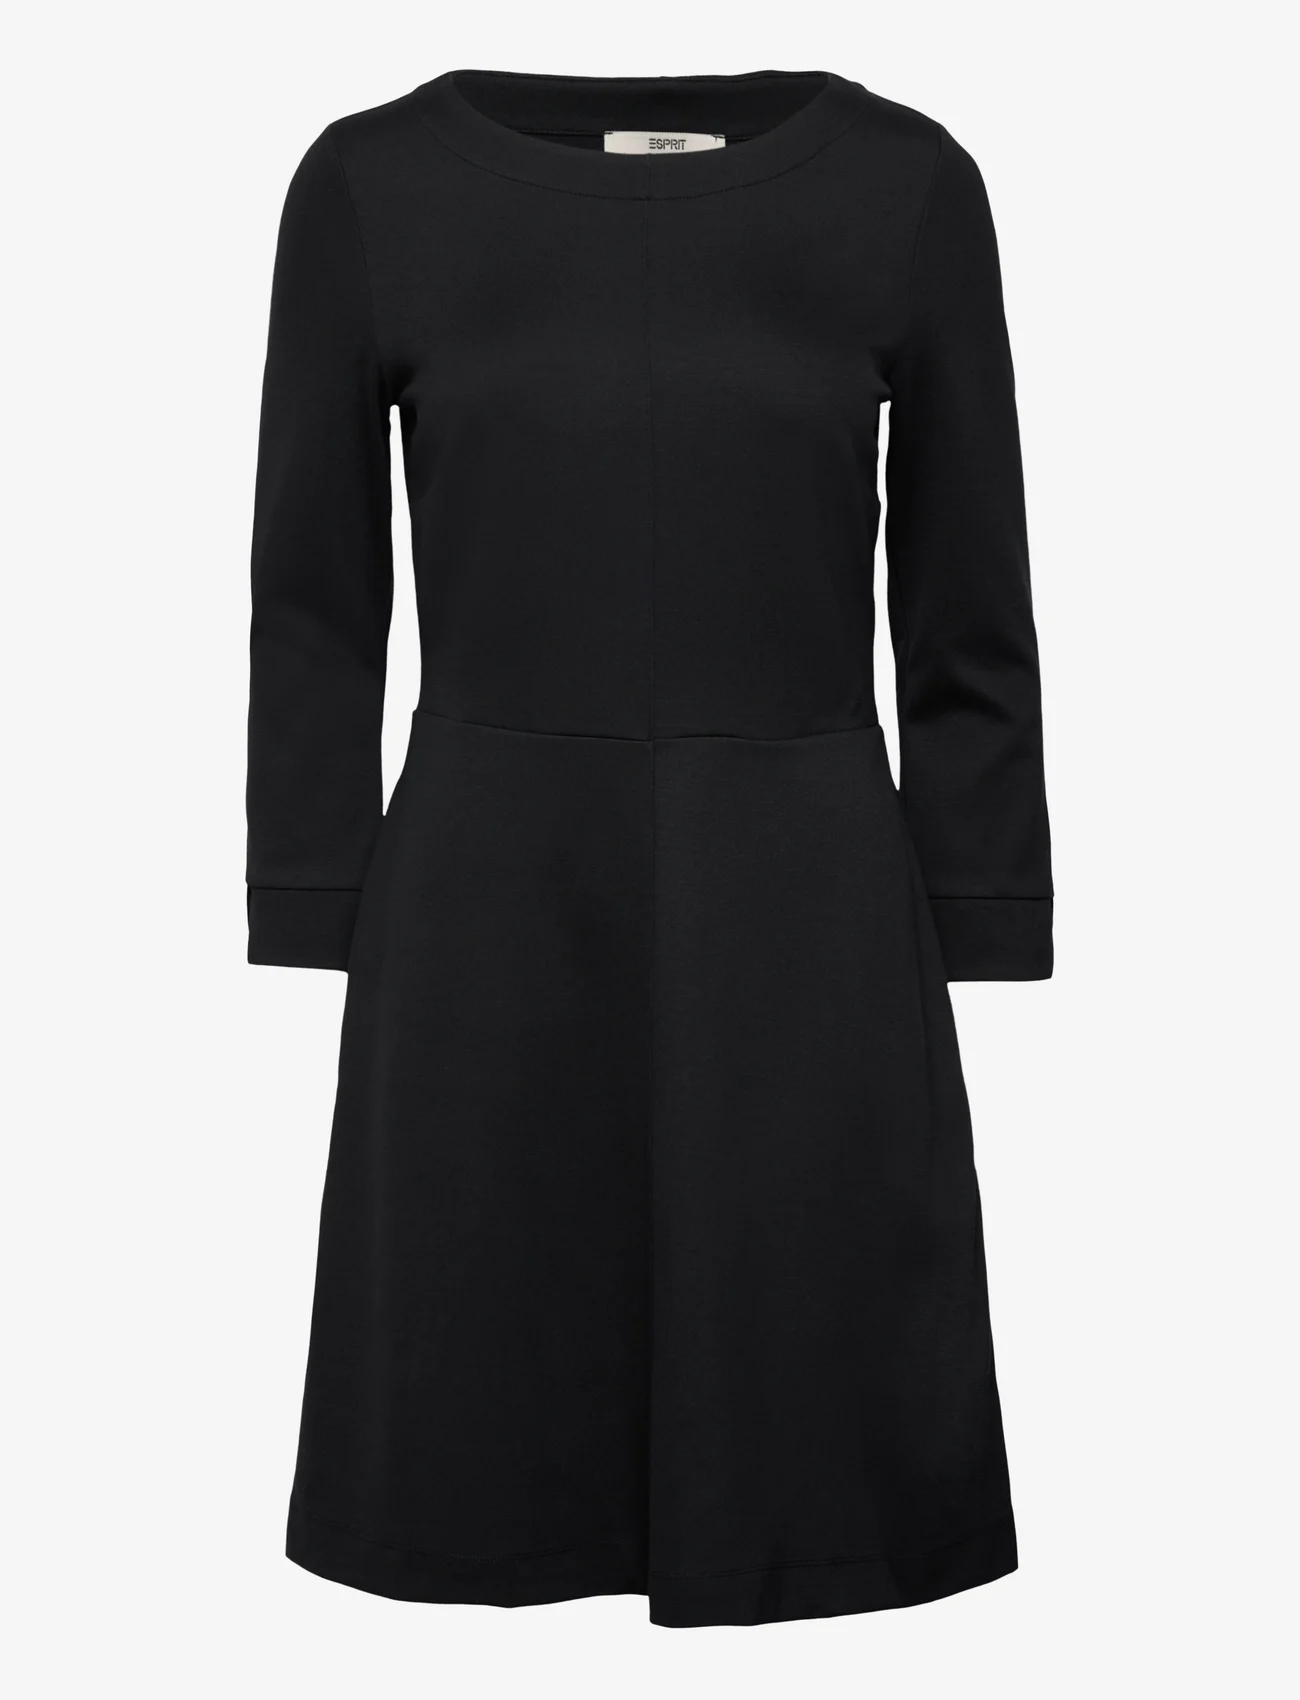 Esprit Casual - Punto mini dress - black - 0